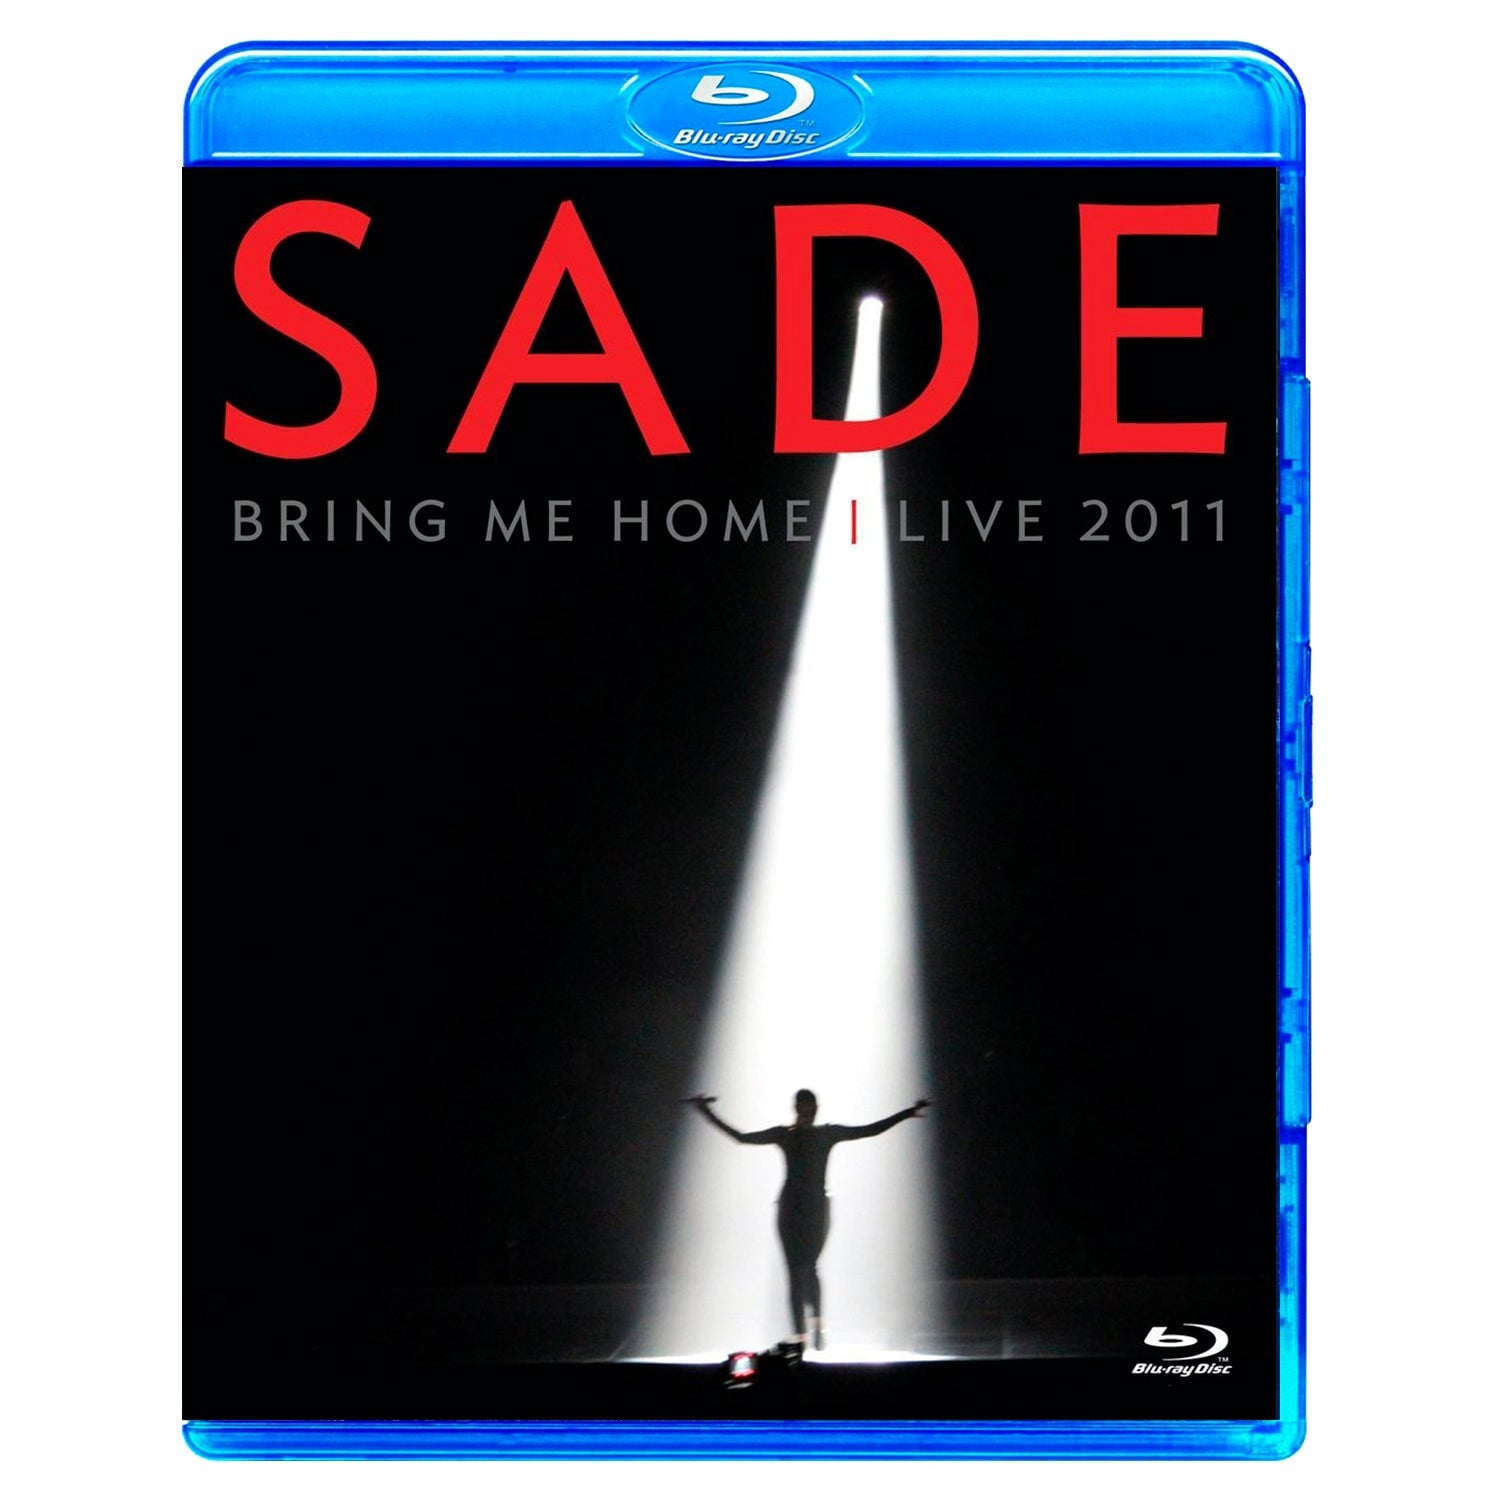 Sade - Bring Me Home | Live 2011 (Blu-ray)